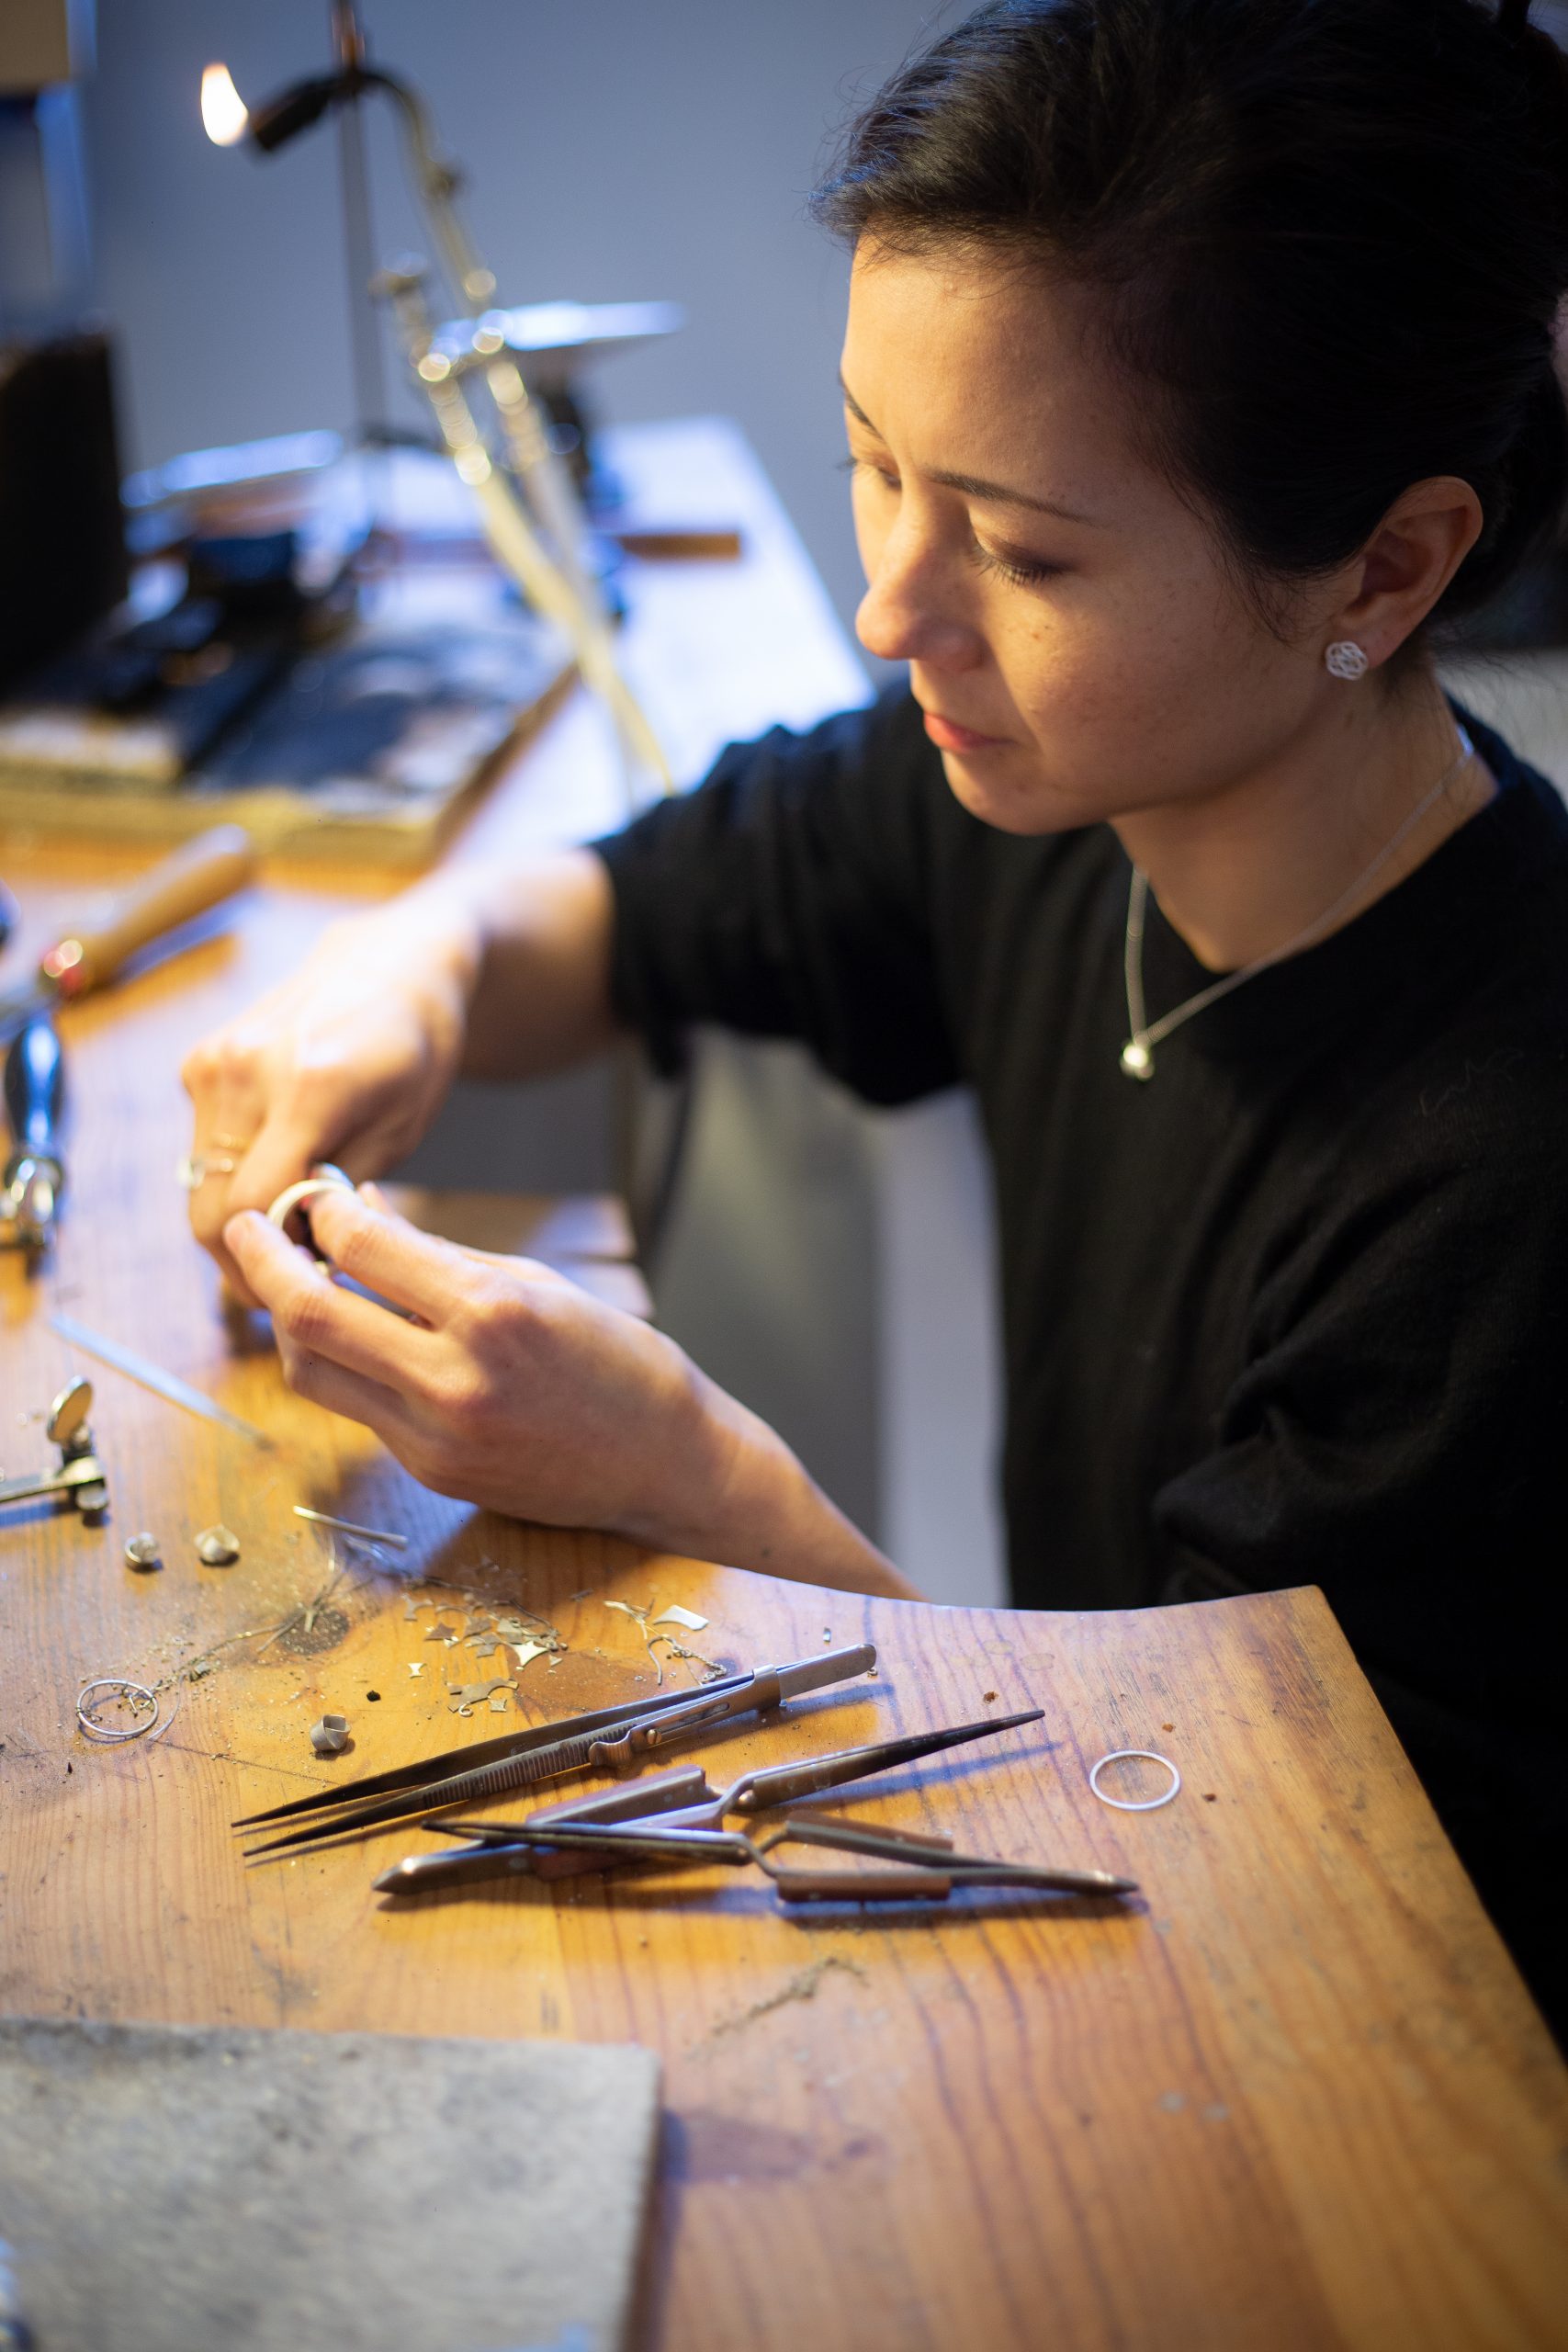 maikoshinagawa-creations-bijoux-decoration-argent-or-origami-montauroux-var-france-japon-atelier-accueil